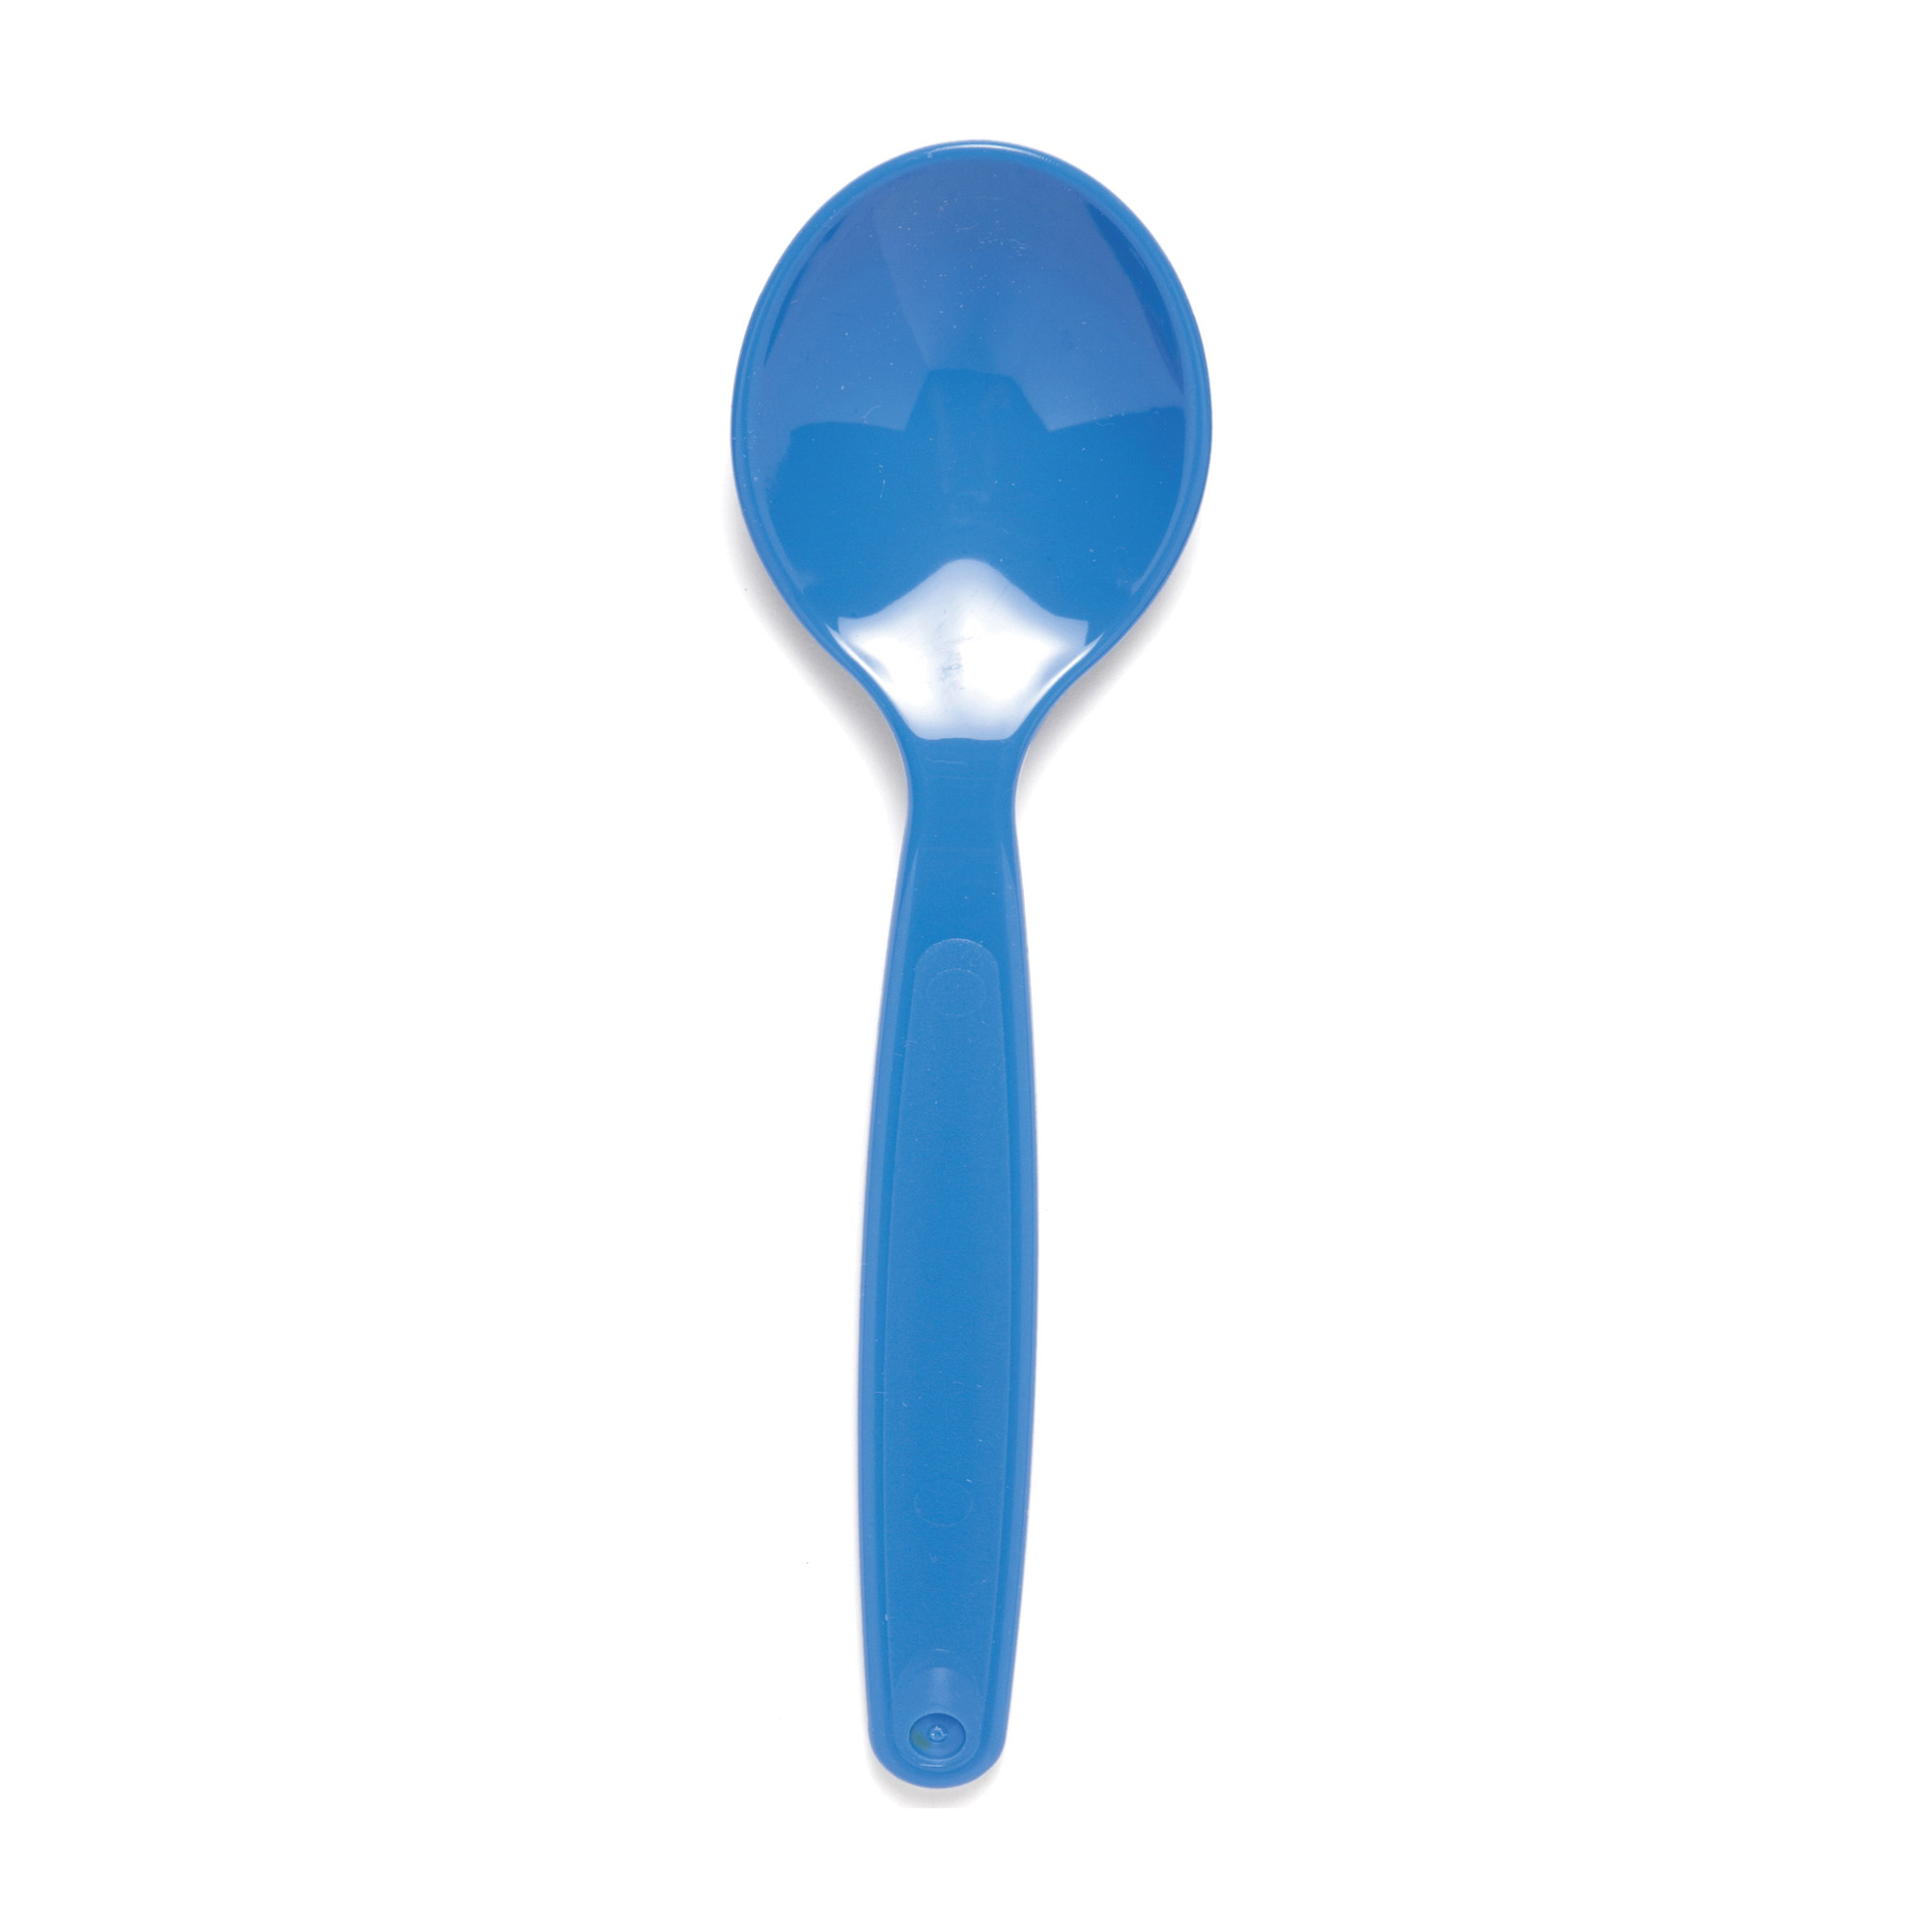 Polycarbonate Dessert Spoon MED BLUE - EACH